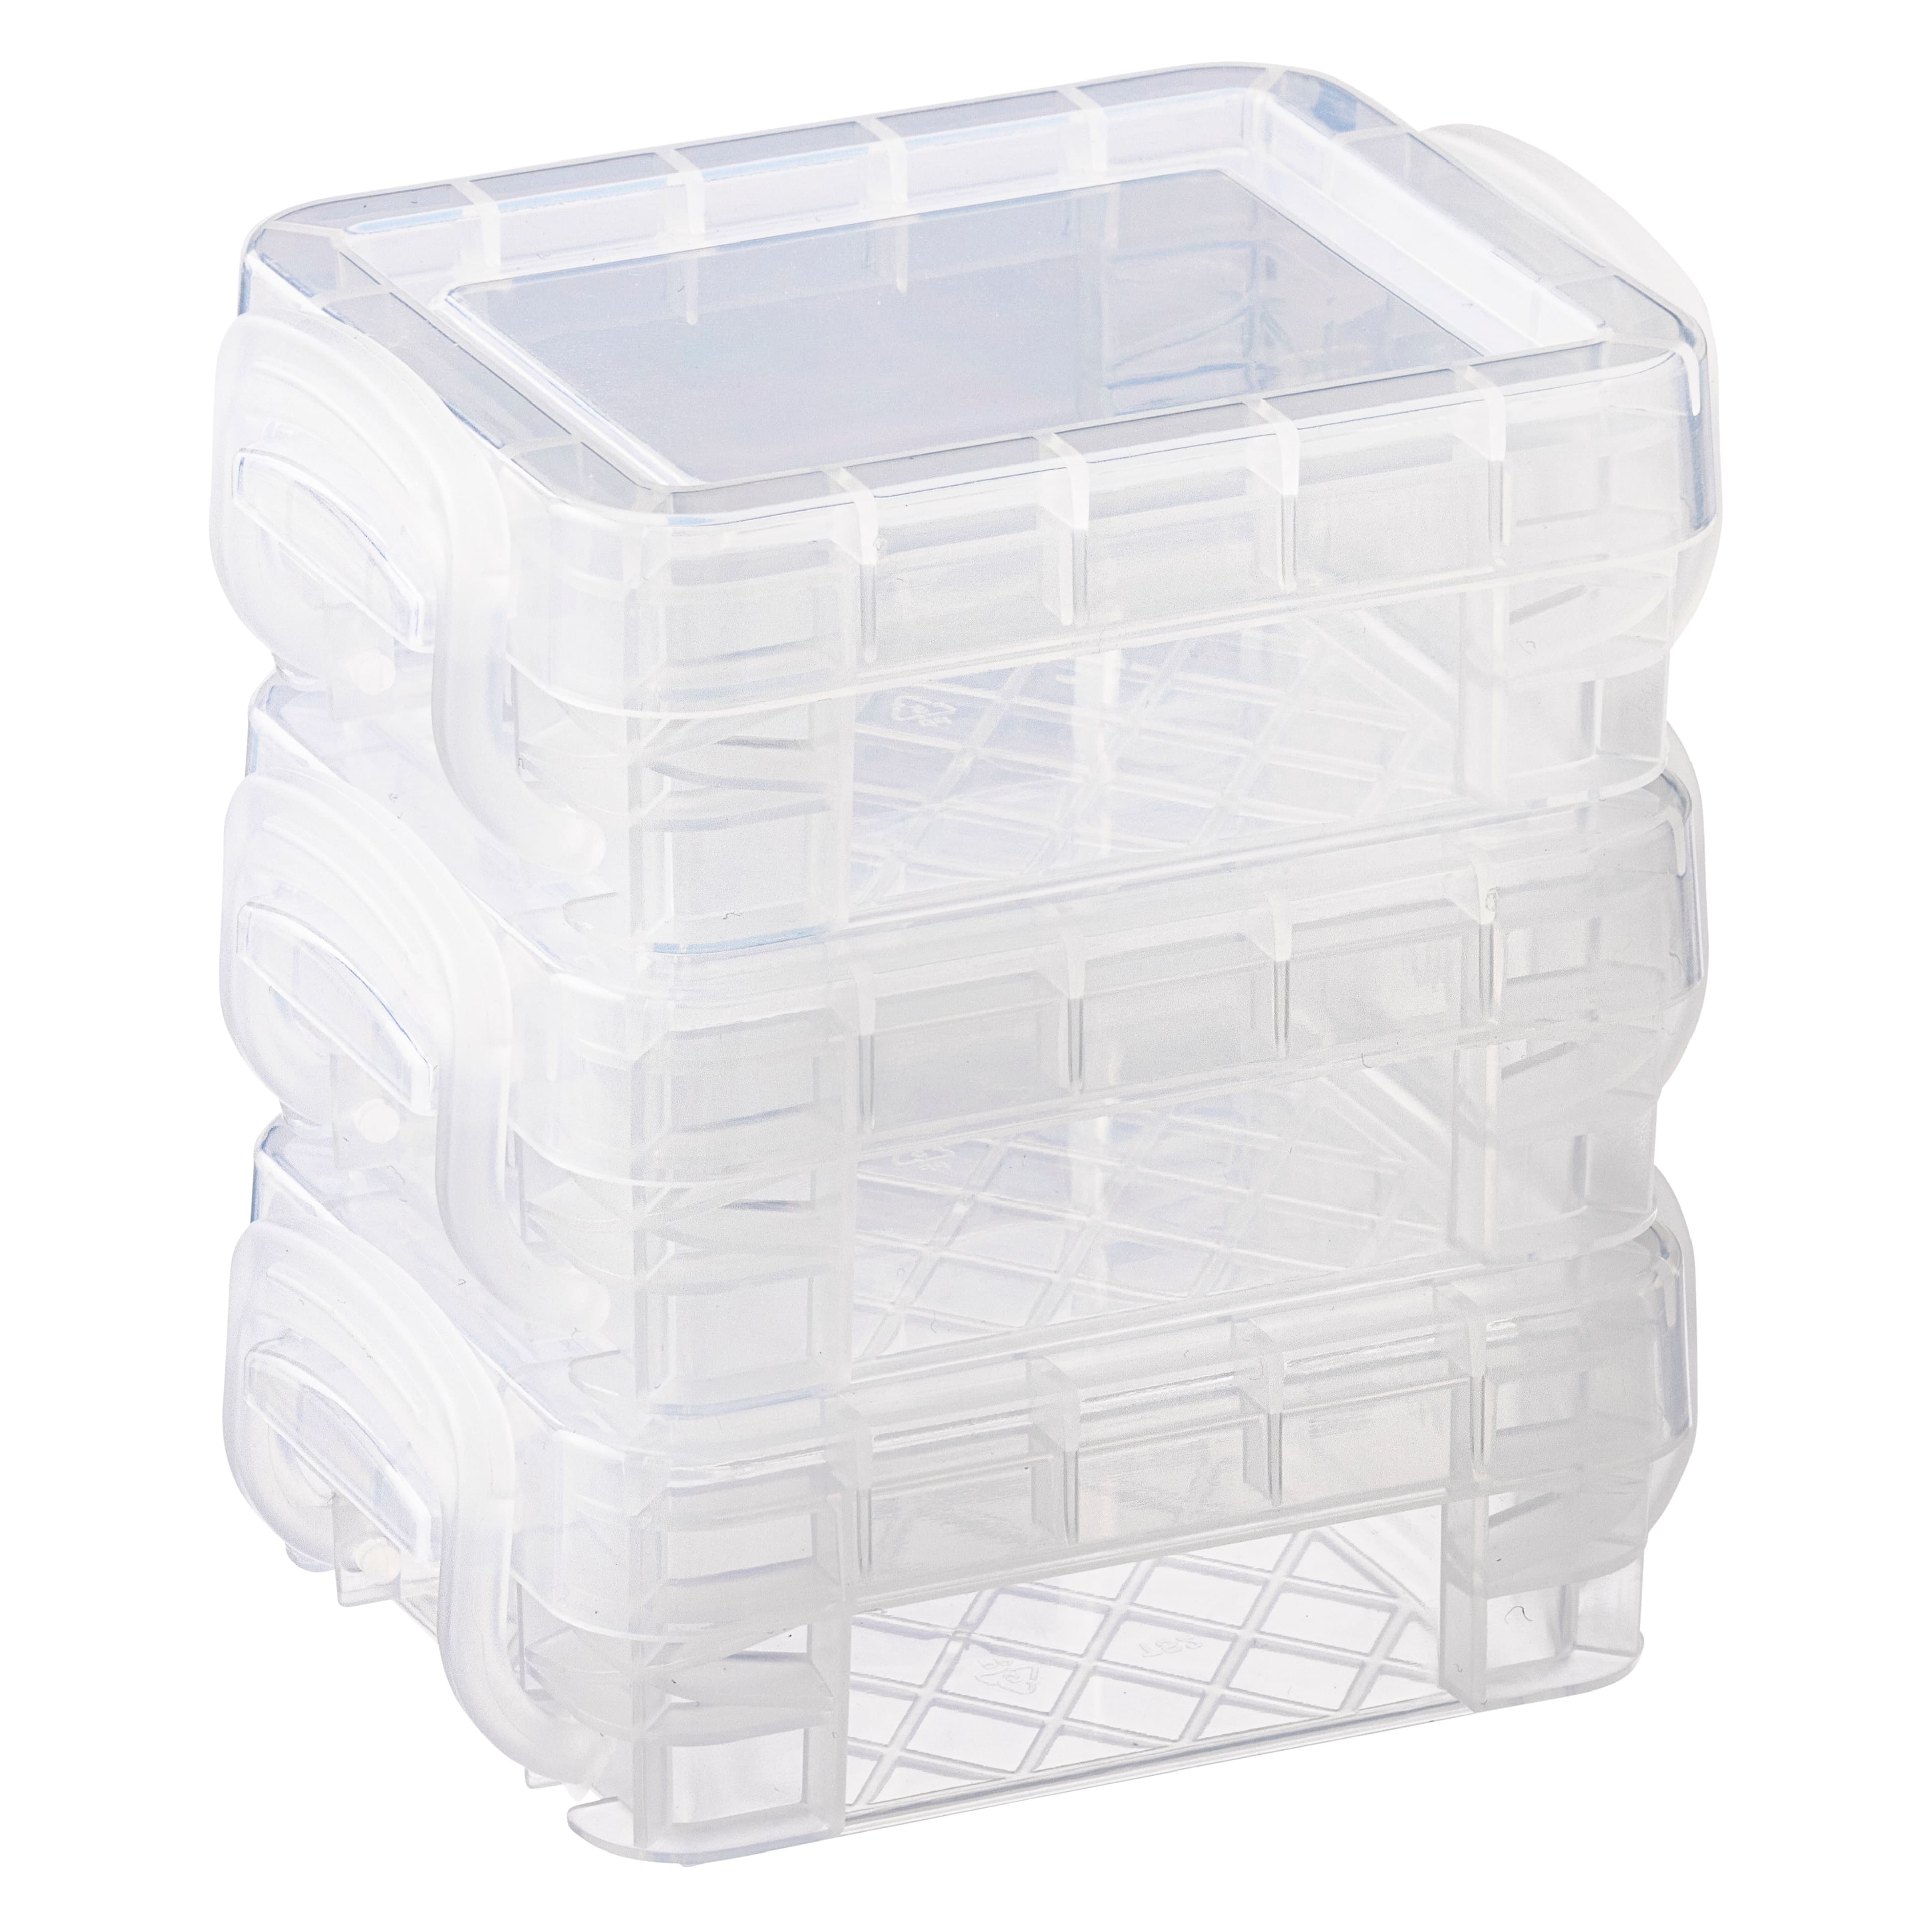 Editable 12x12 Storage Container Labels  Plastic container storage,  Storage containers, Craft storage organization